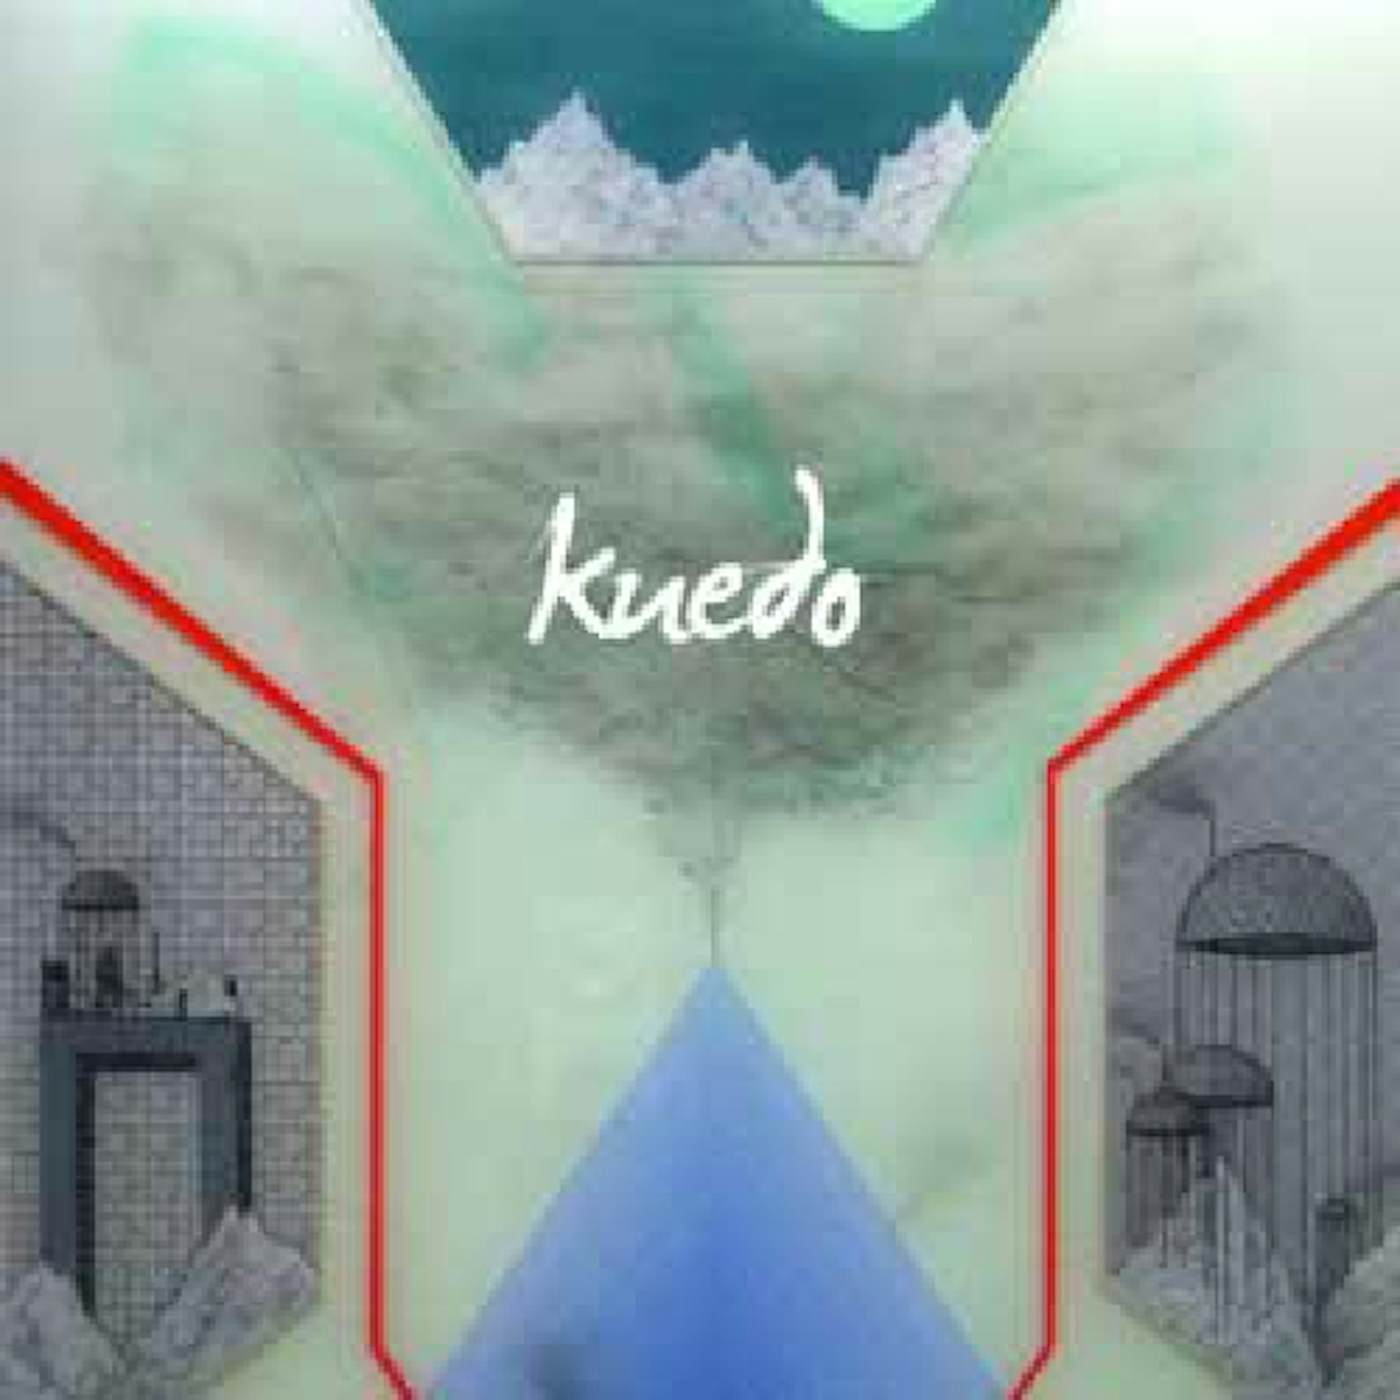 Kuedo DREAM SEQUENCE Vinyl Record